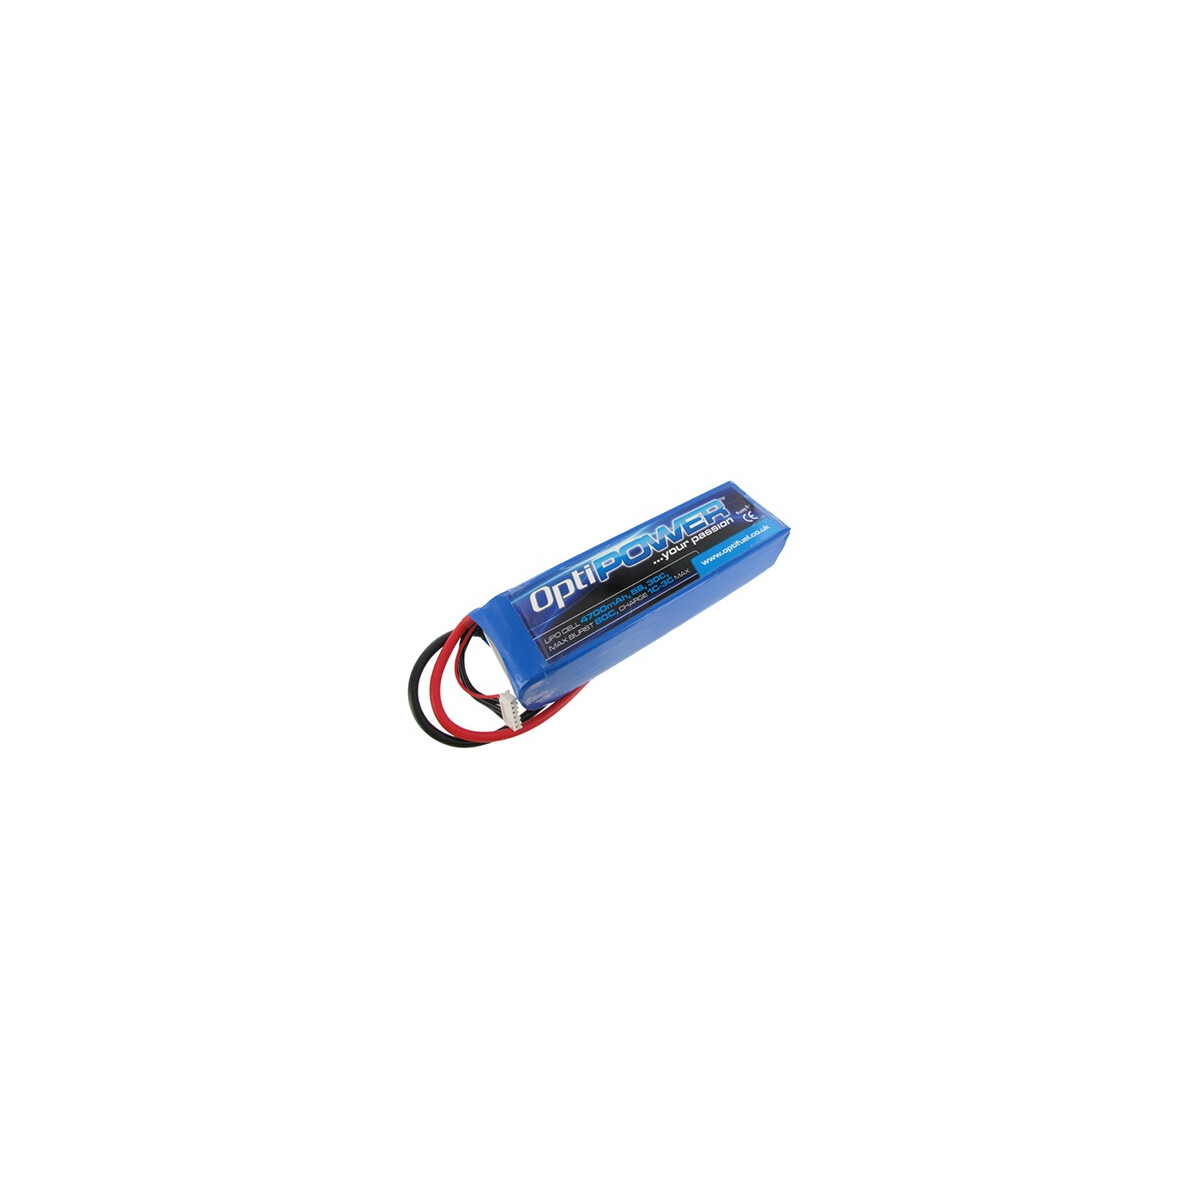 OptiPower Lipo Cell Battery 4700mAh 5S 30C